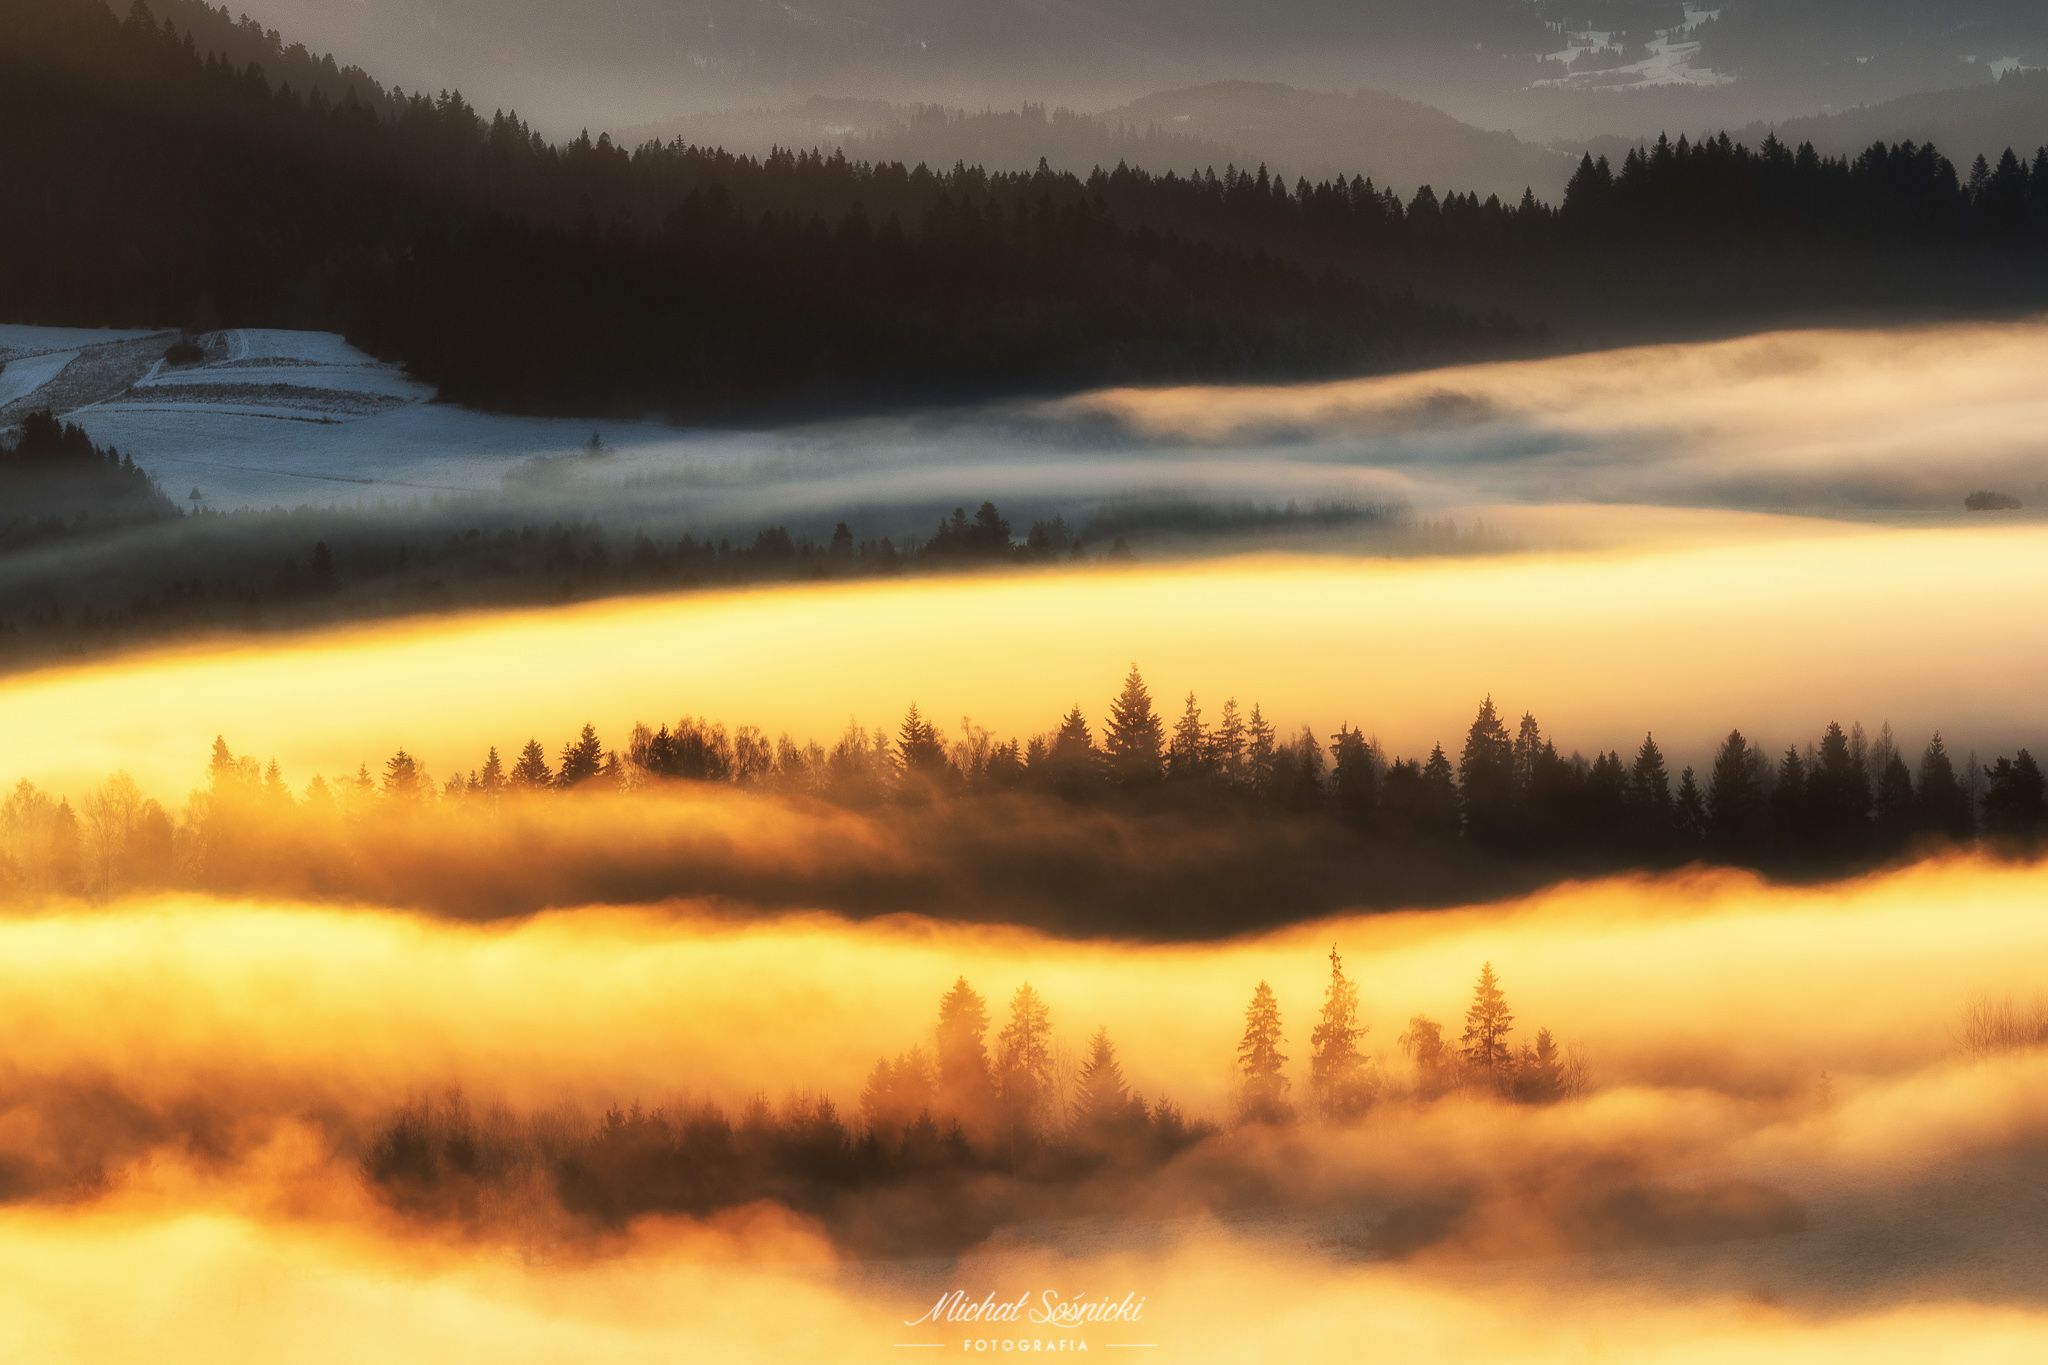 #poland #pentax #benro #lightroom #nikcollection #nature #sunrise #mountains #sky #fog #foggy #morning #pix, Michał Sośnicki